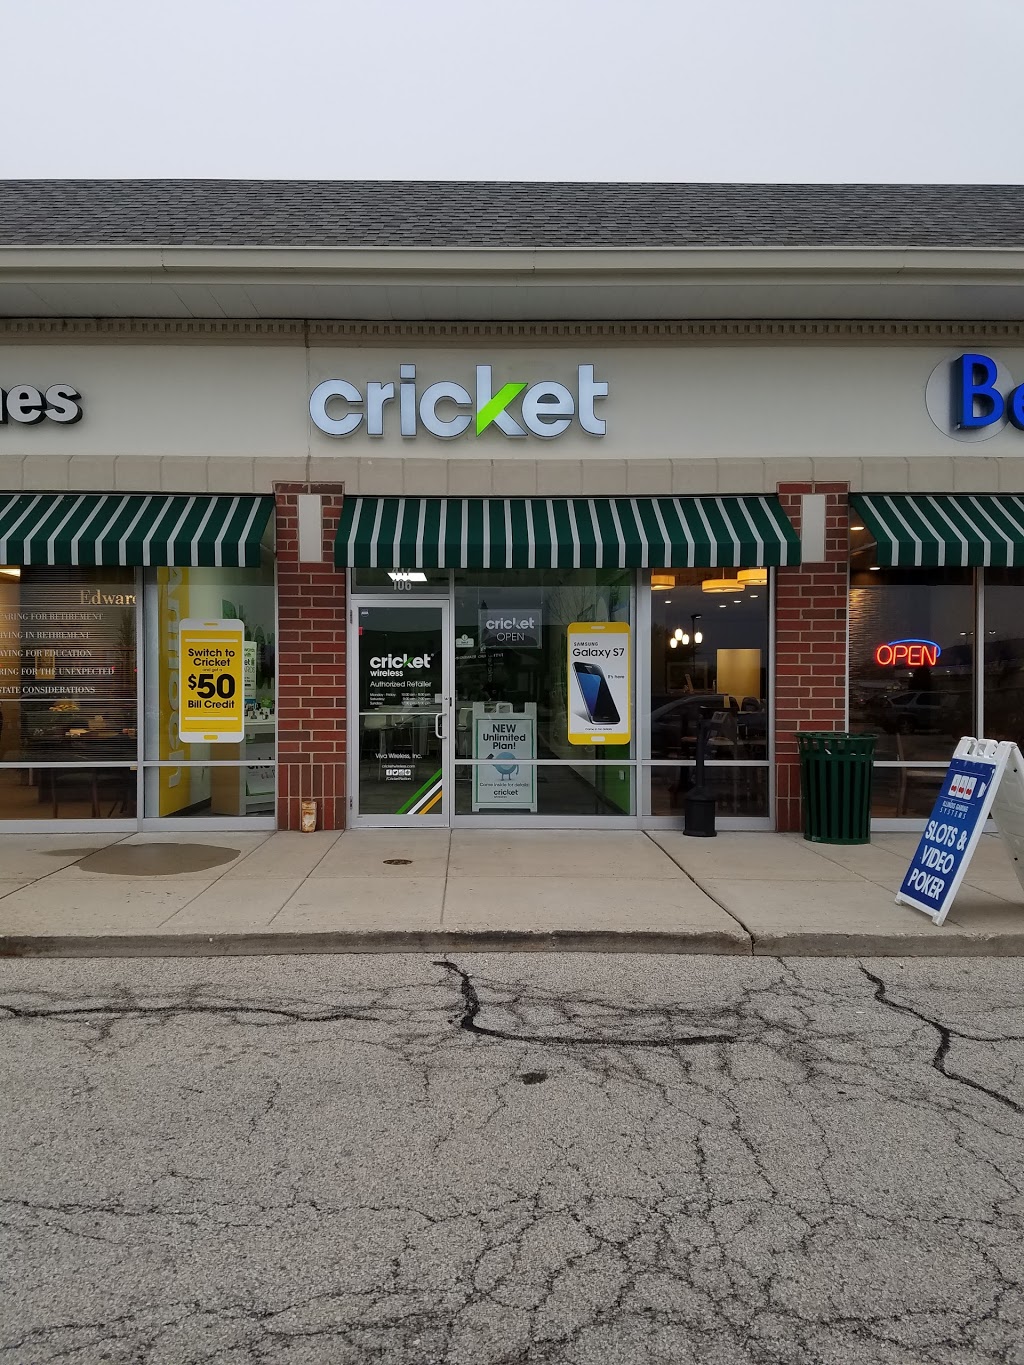 Cricket Wireless Authorized Retailer | 417 IL-173 Unit 106, Antioch, IL 60002, USA | Phone: (847) 731-2222